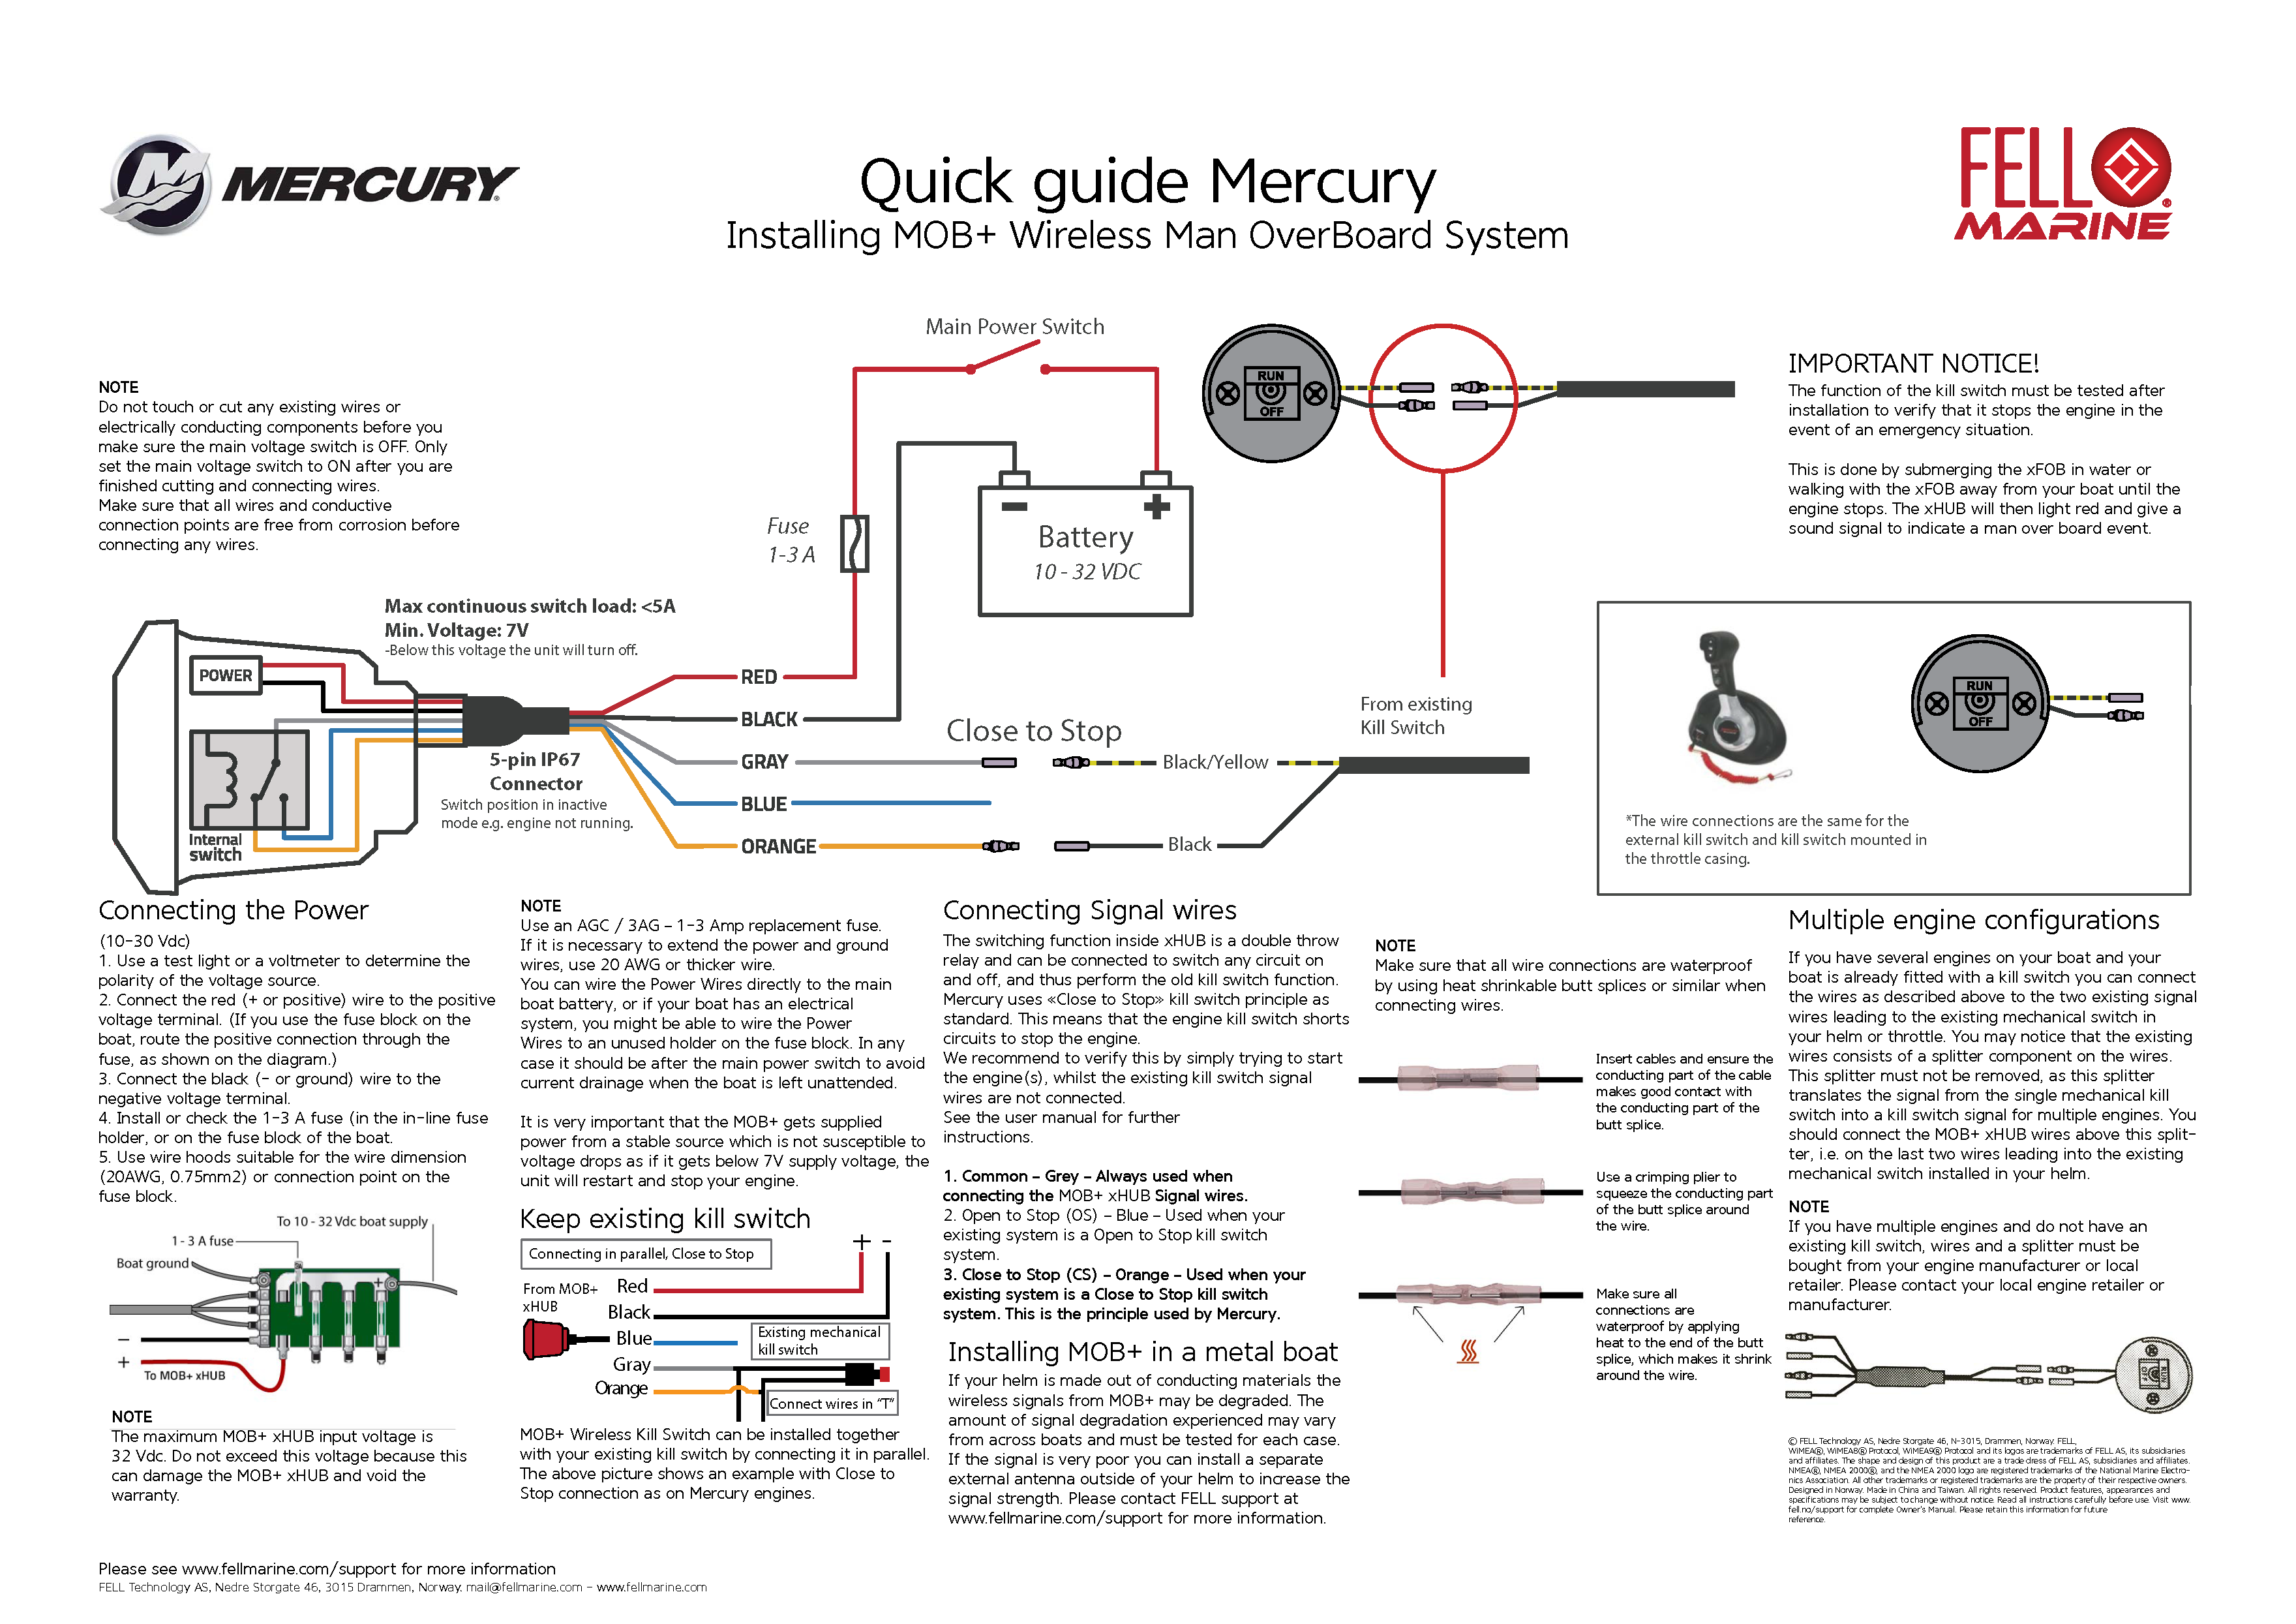 Mercury_QuickGuide.png